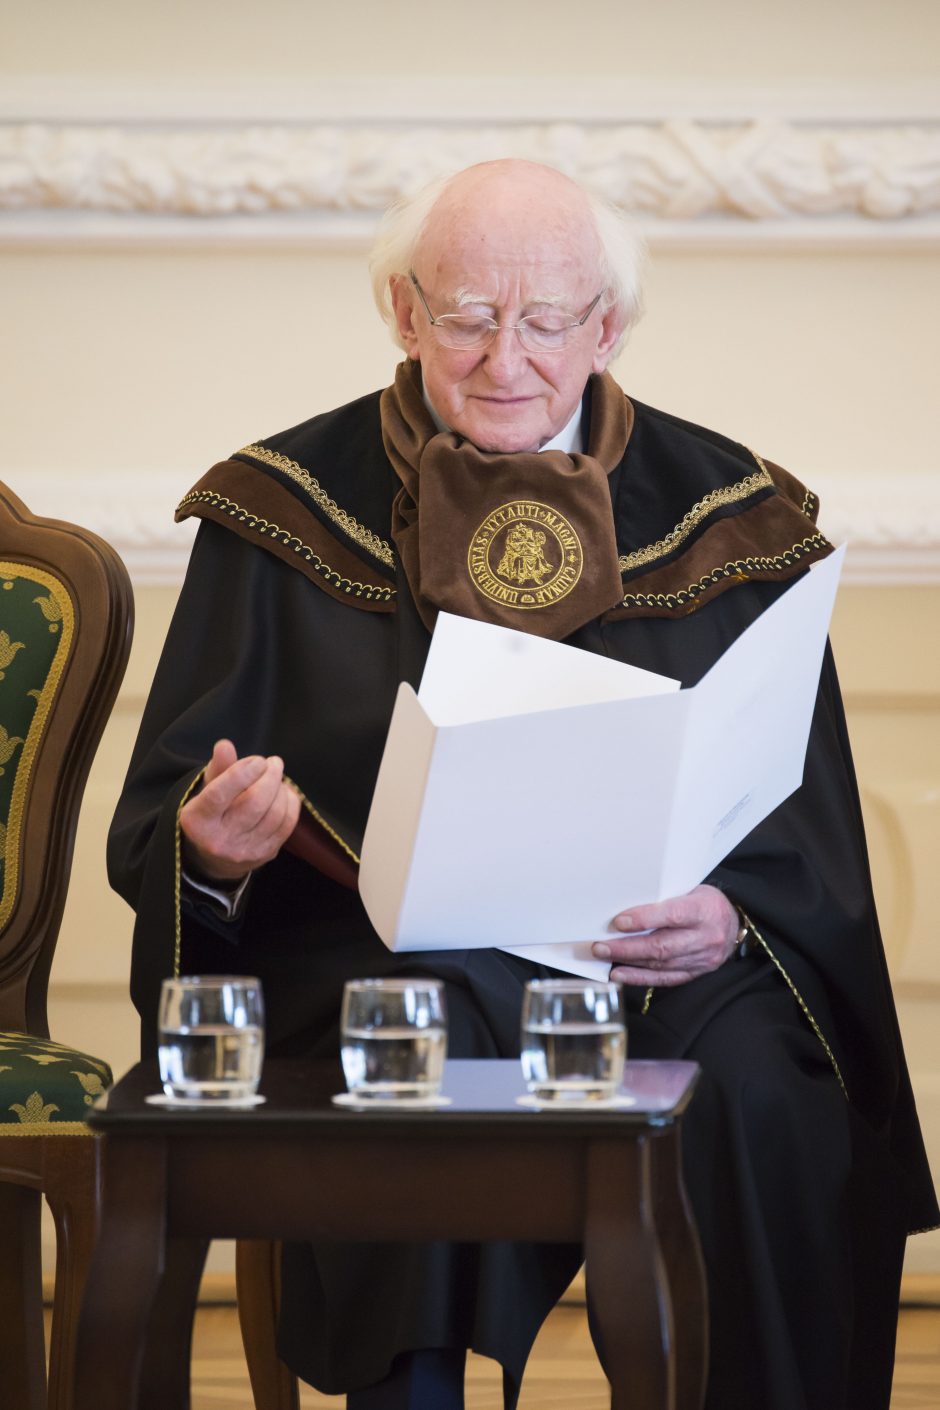 Airijos prezidentas tapo VDU garbės daktaru 